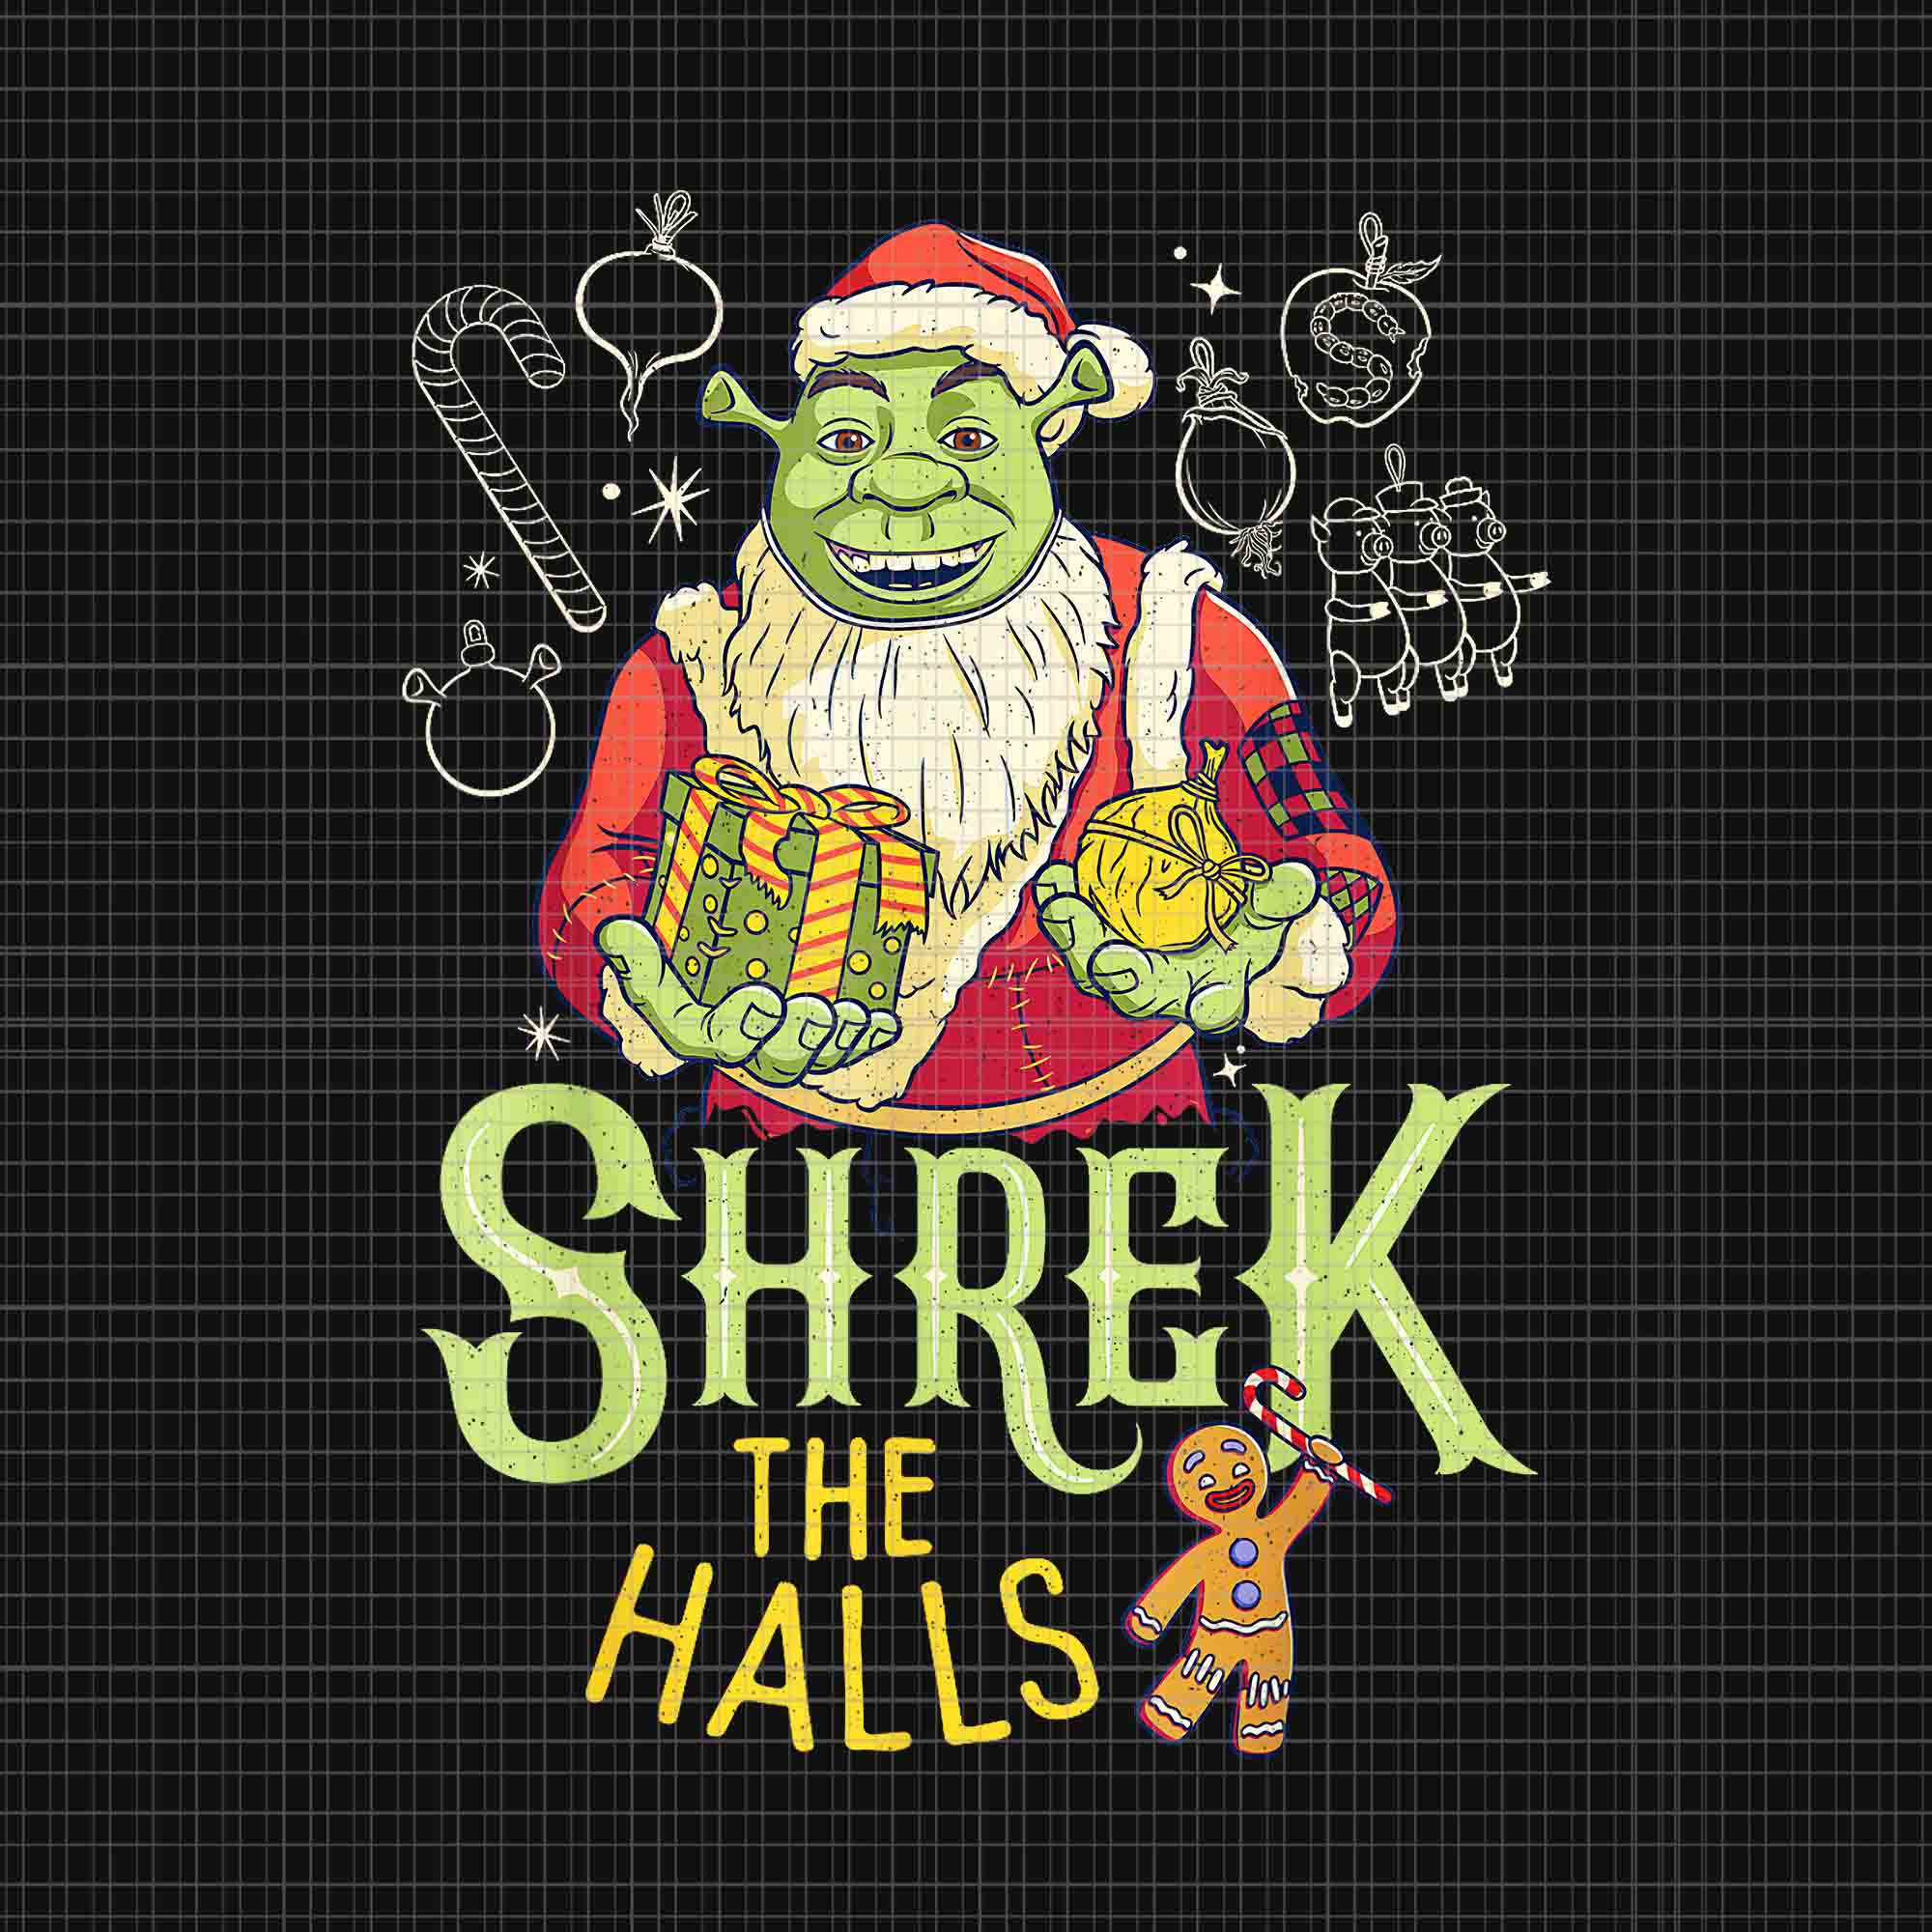 Shrek for St Patricks Day Svg Cartoon Characters Friends SVG 